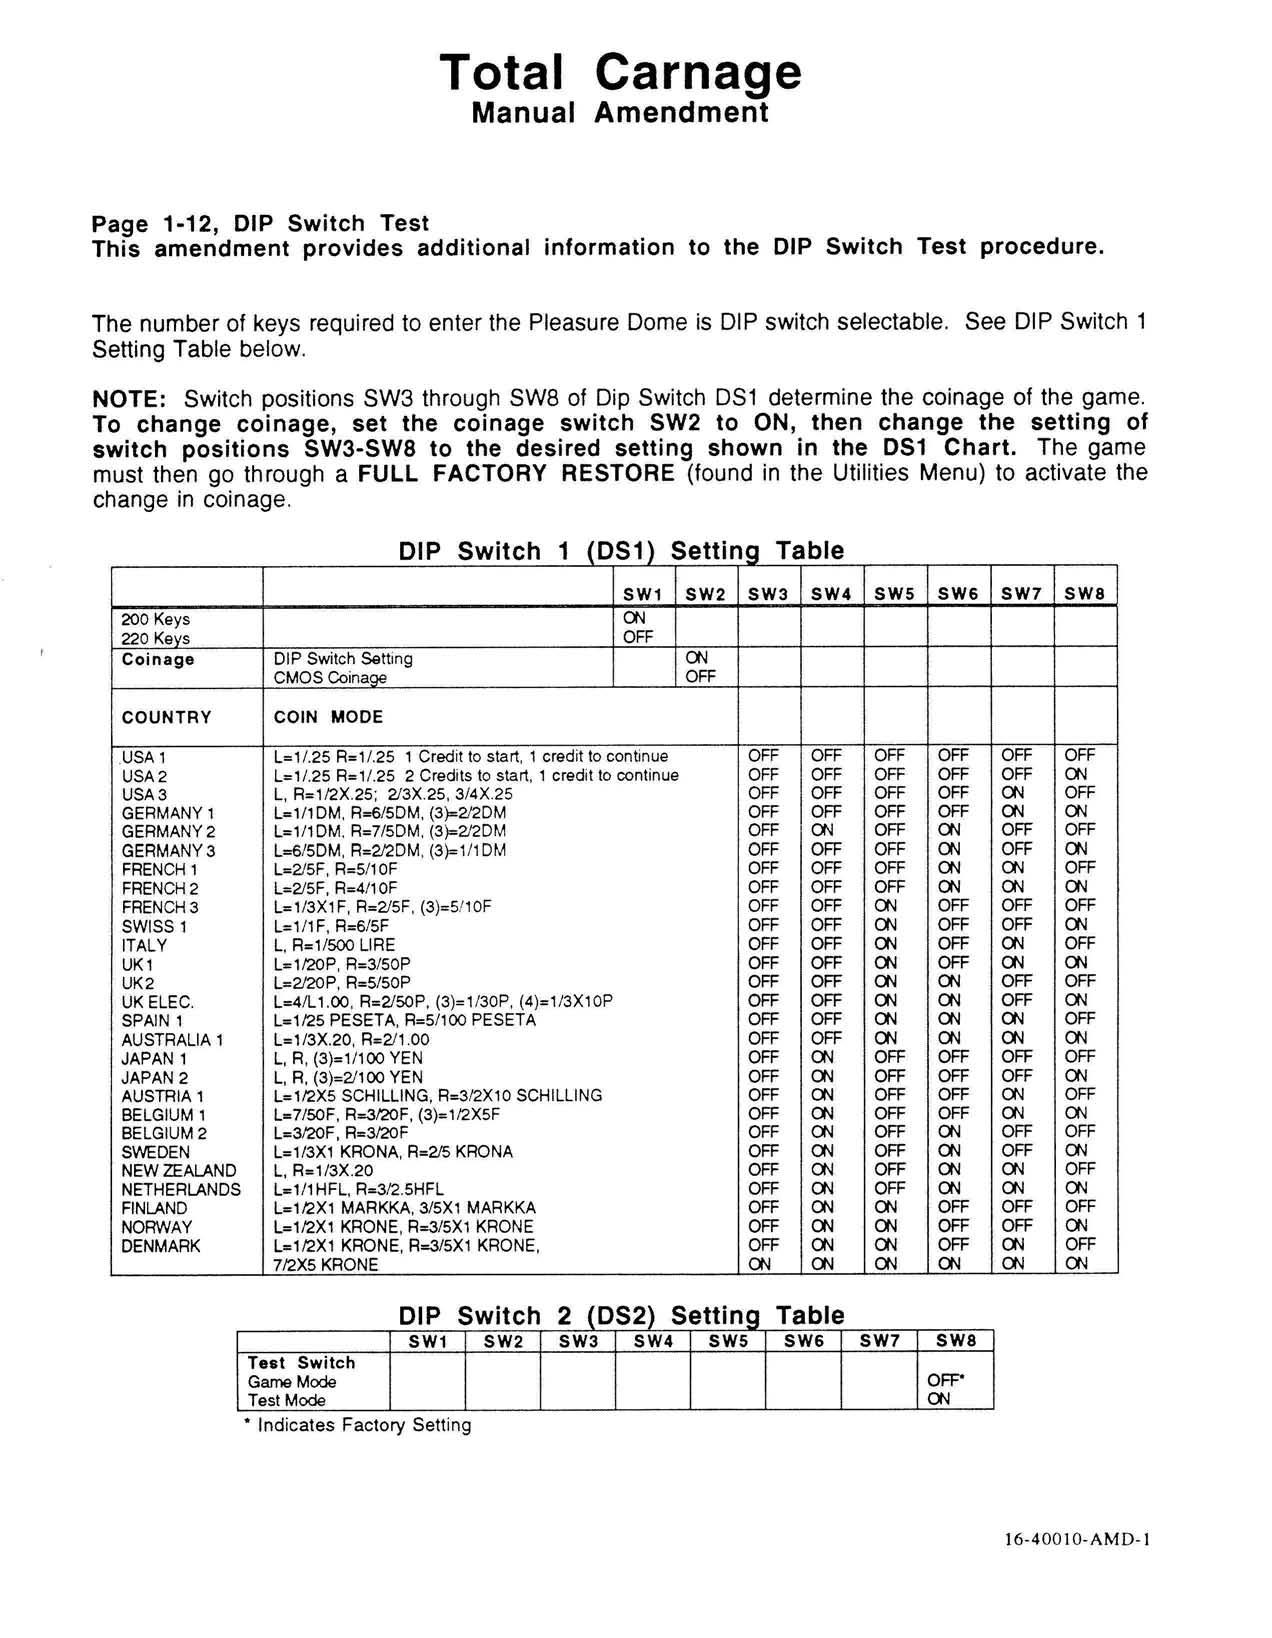 Total Carnage Manual Amendment (16-40010-AMD-1)